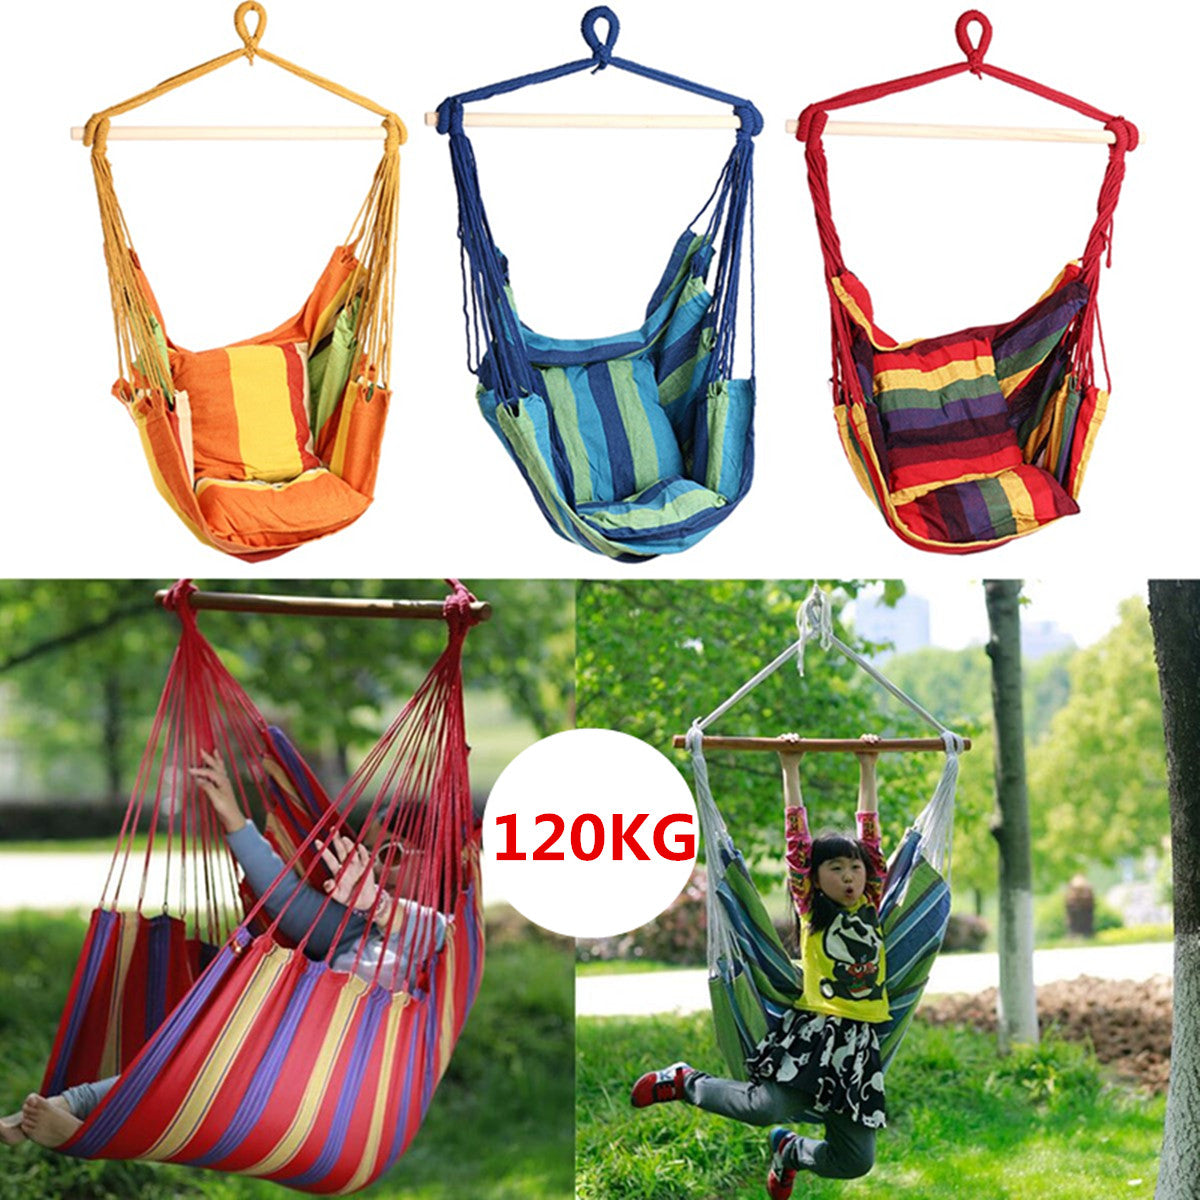 Outdoor Canvas Hammock Chair Swing Hanging Chair Relax Soft Indoor Garden Camping Swing